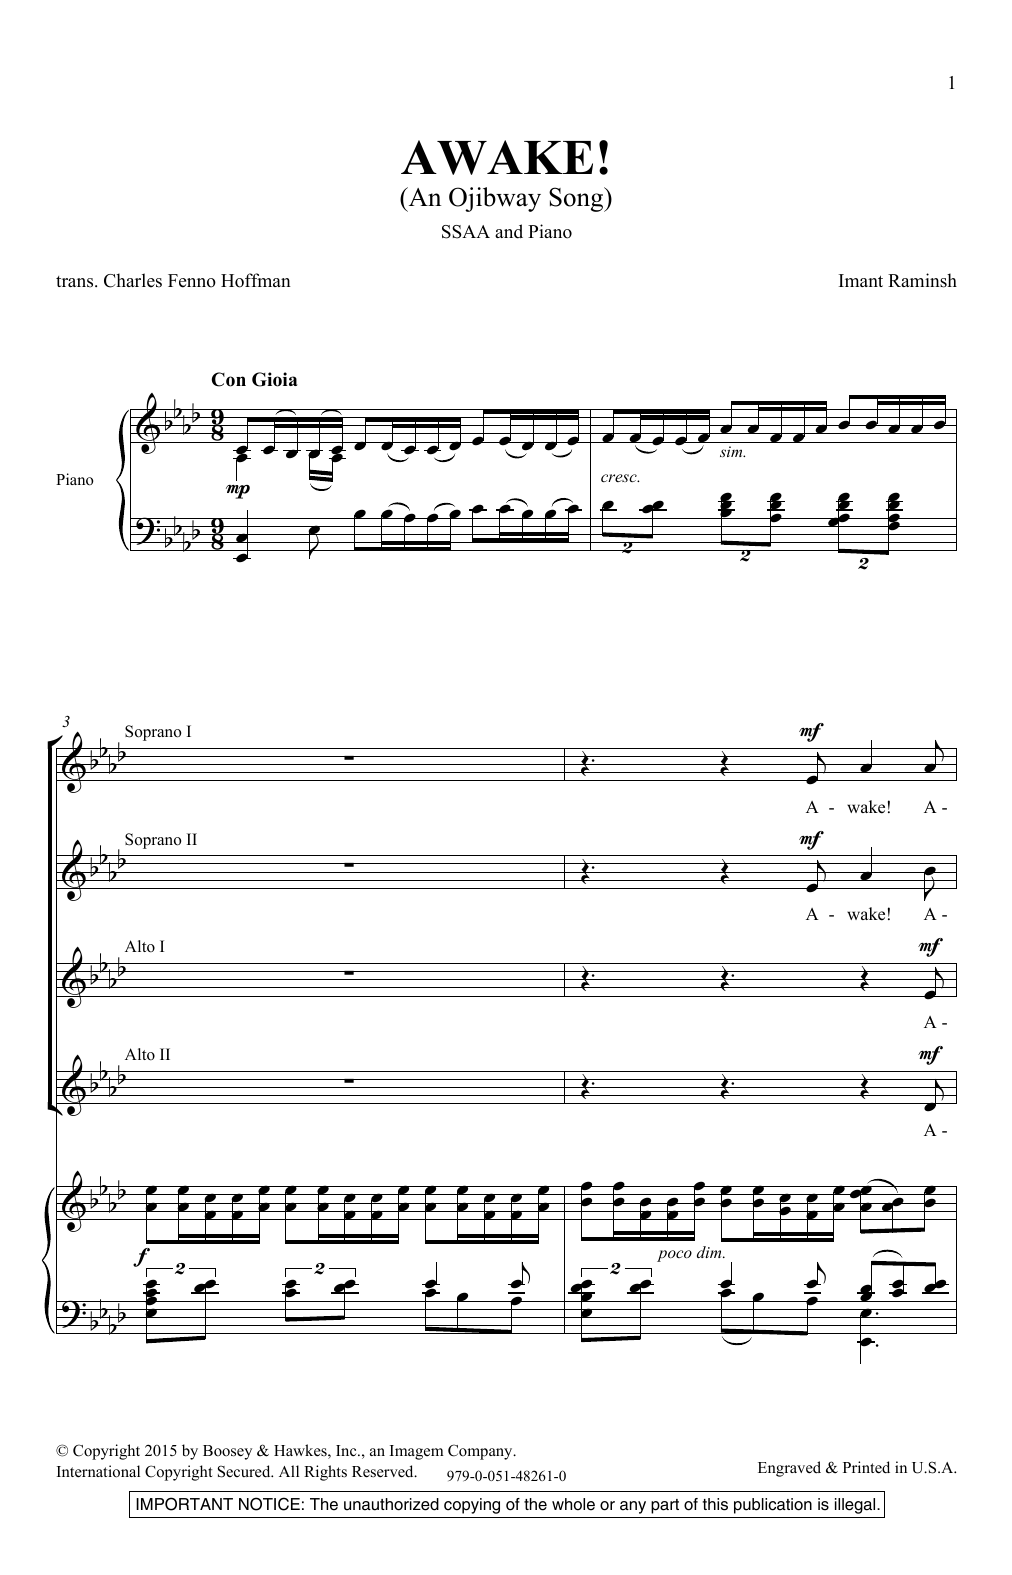 Imant Raminsh Awake! An Ojibway Song Sheet Music Notes & Chords for SSA - Download or Print PDF